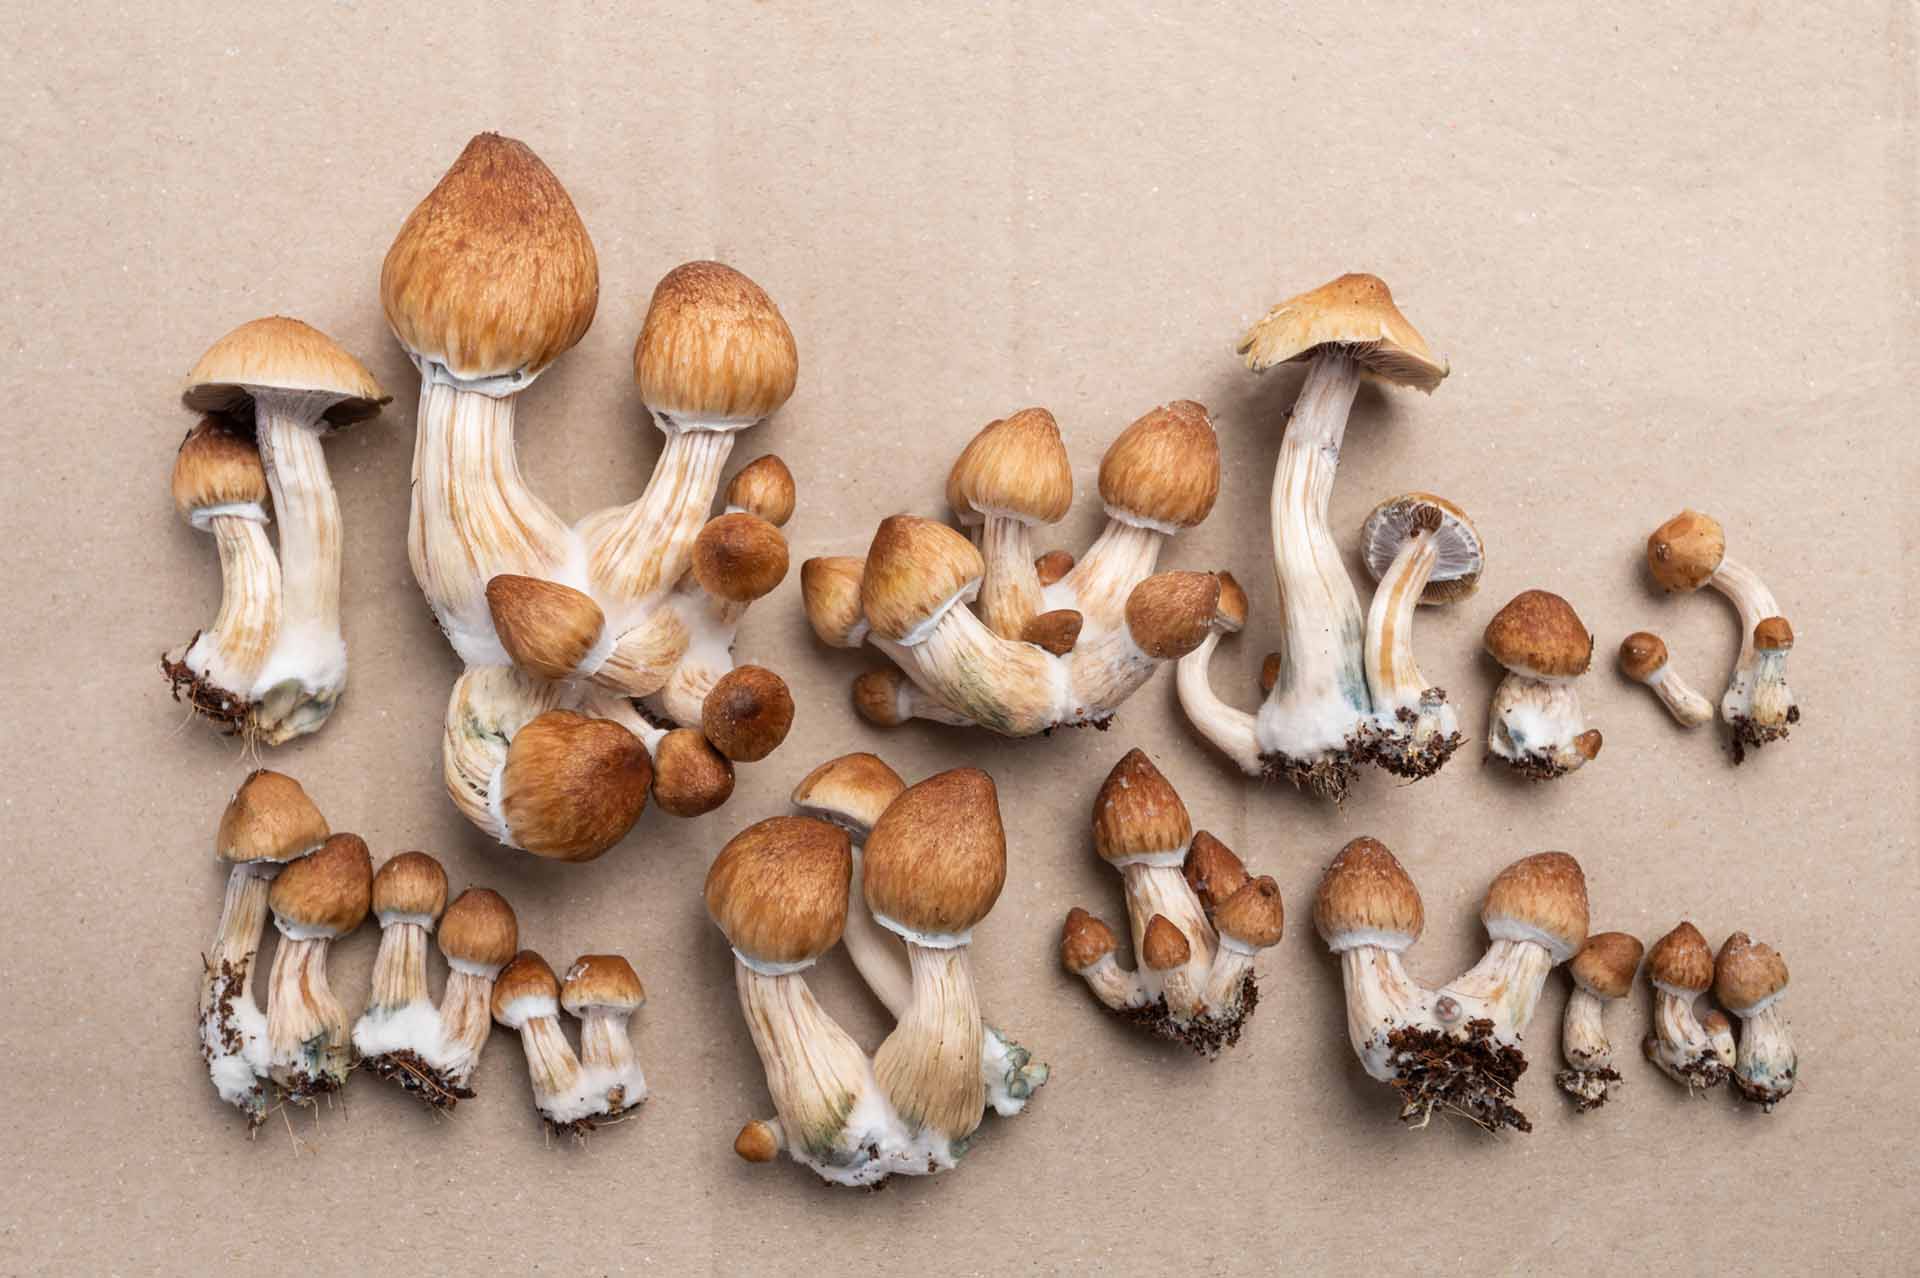 psilocybin mushrooms